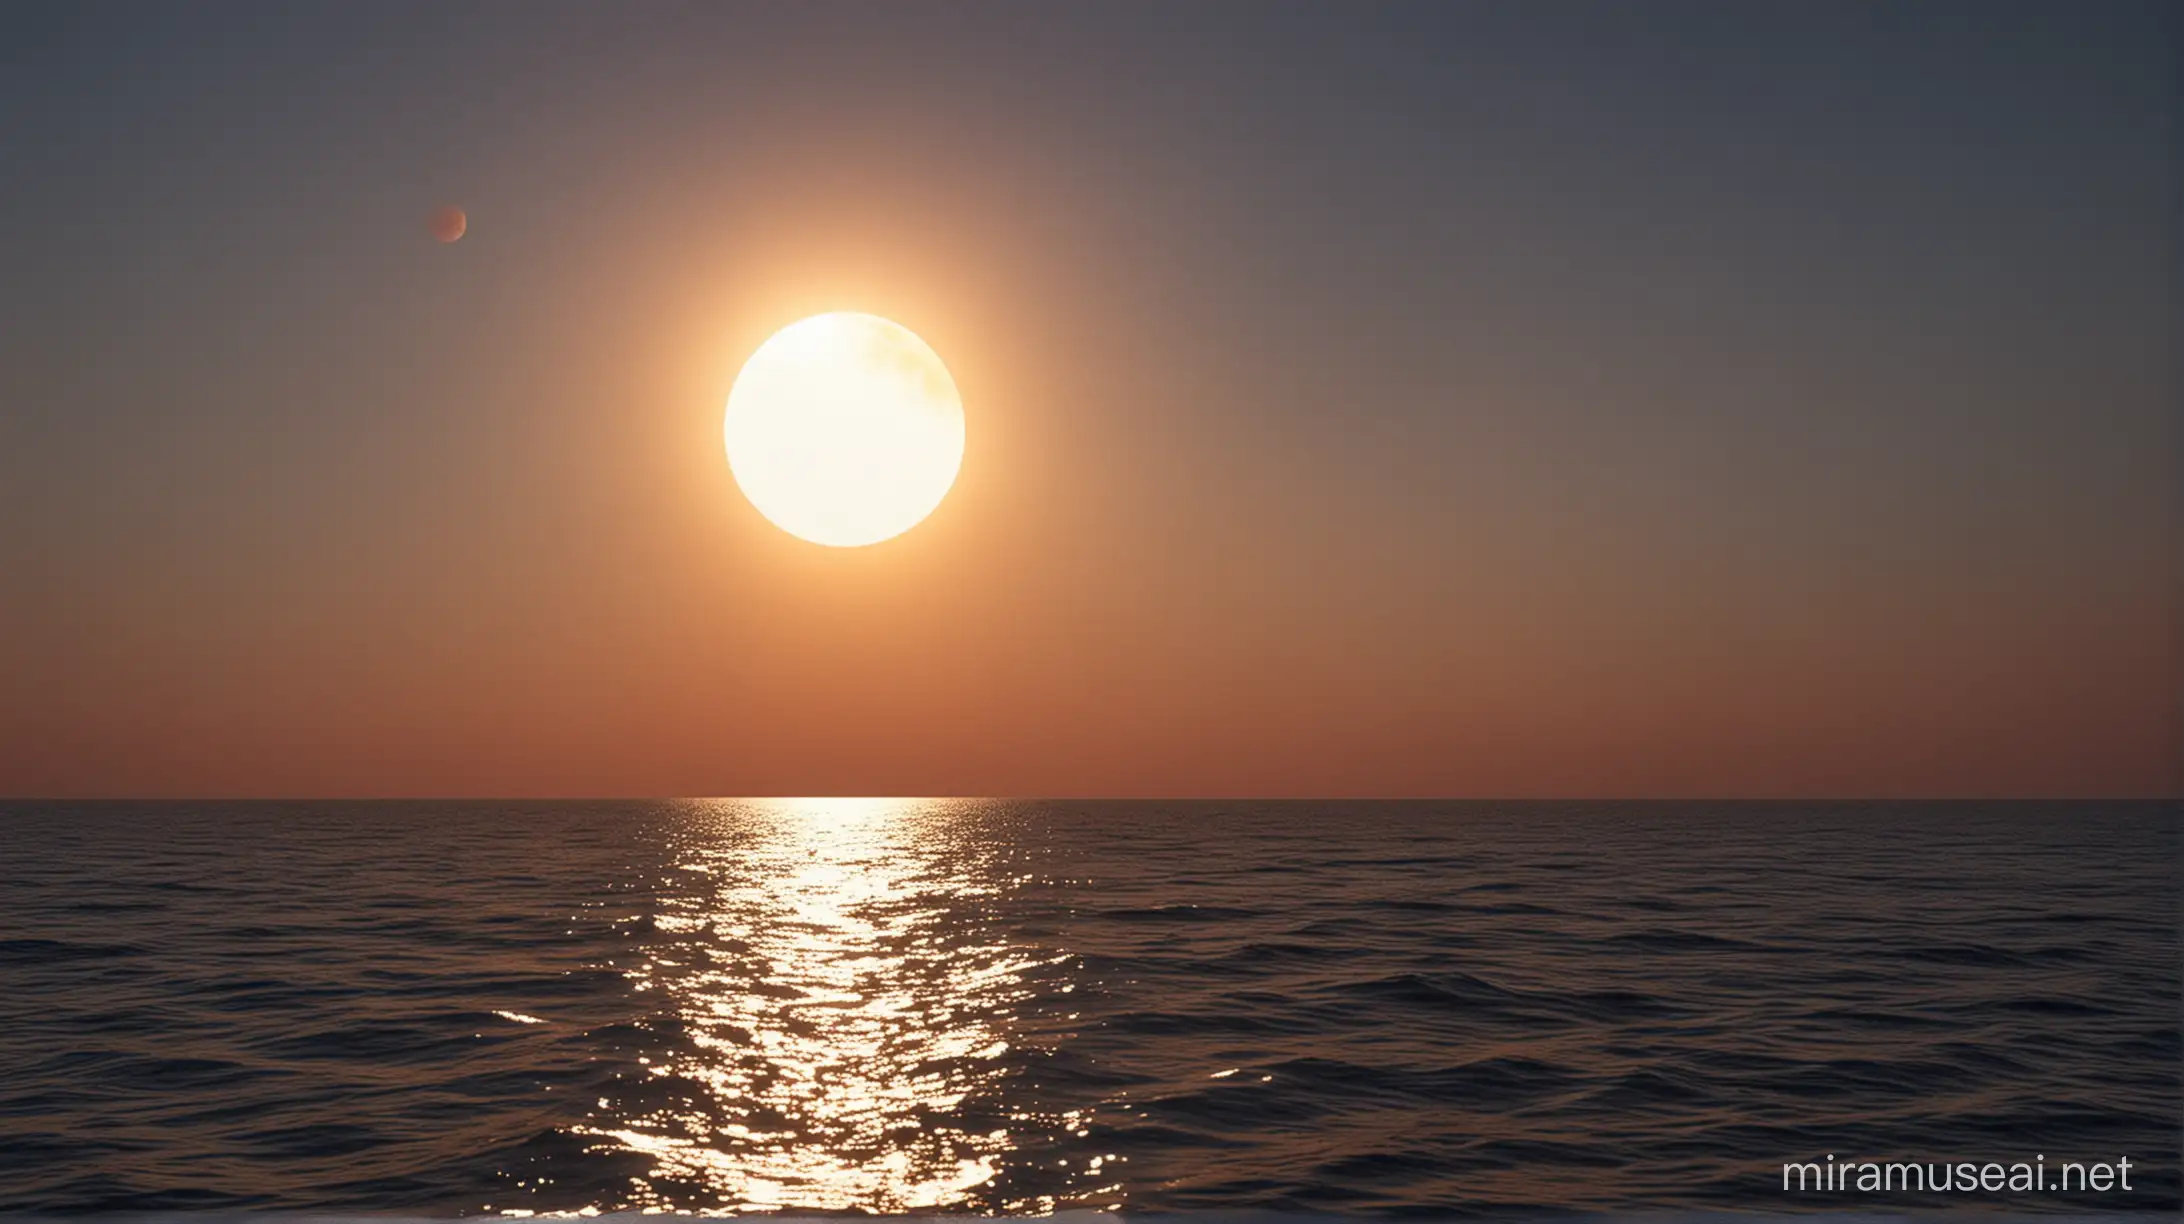 Serene Sea Sunset with Lunar Eclipse